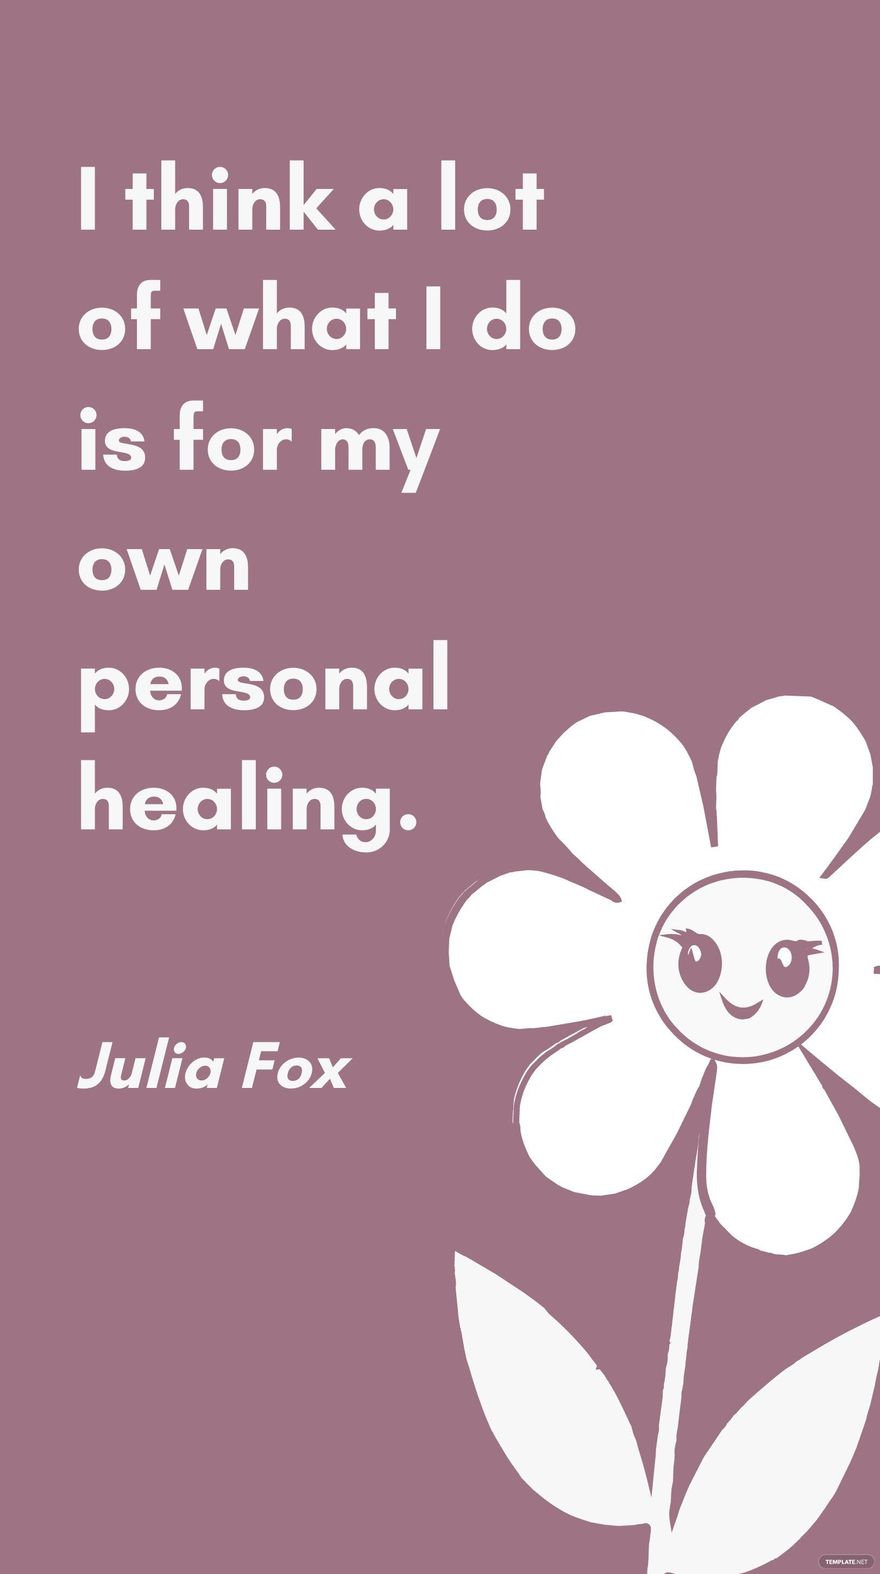 Julia Fox - I think a lot of what I do is for my own personal healing.